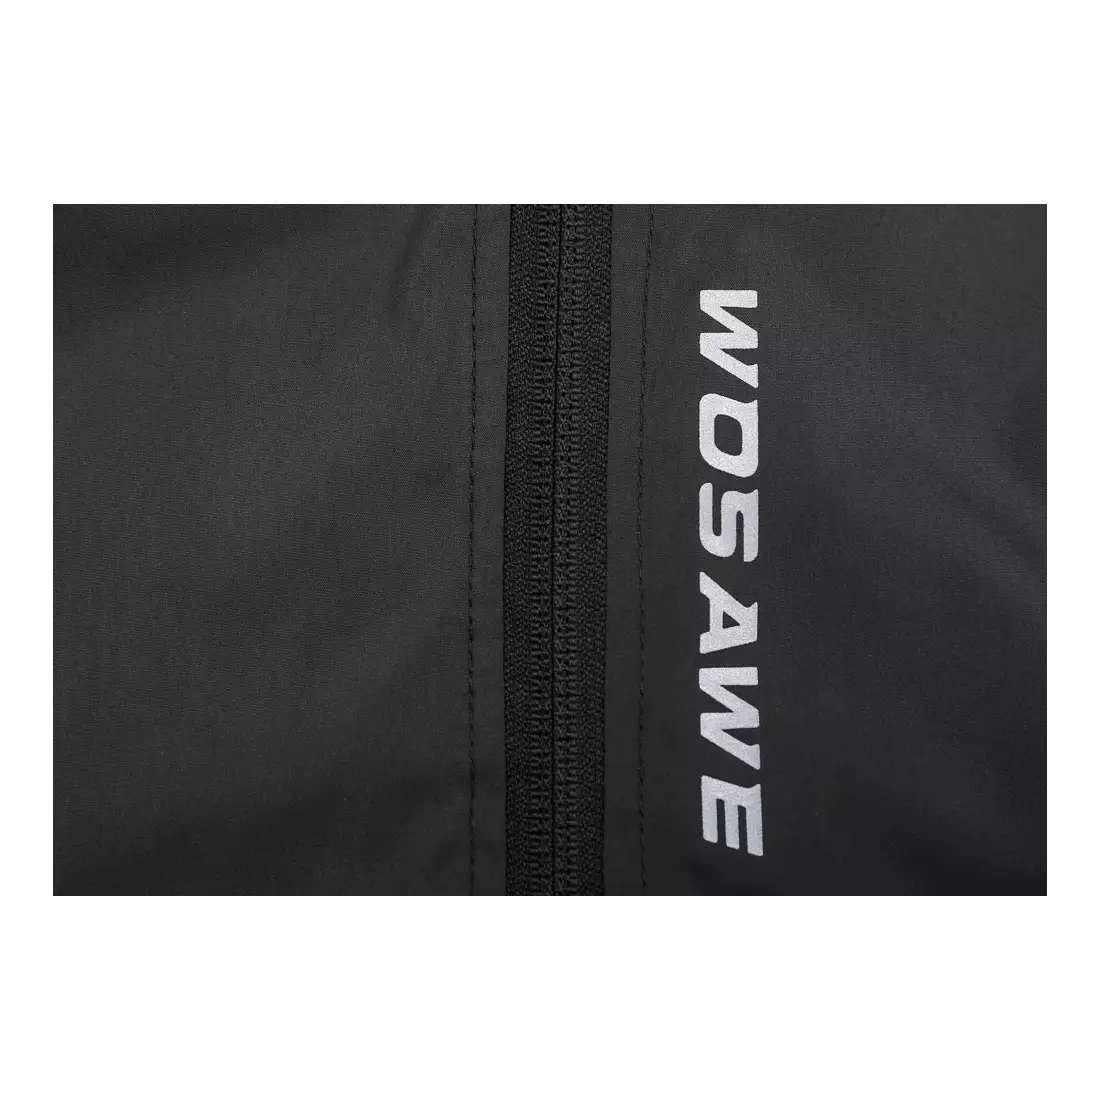 WOSAWE lightweight bicycle vest, black mesh BL205